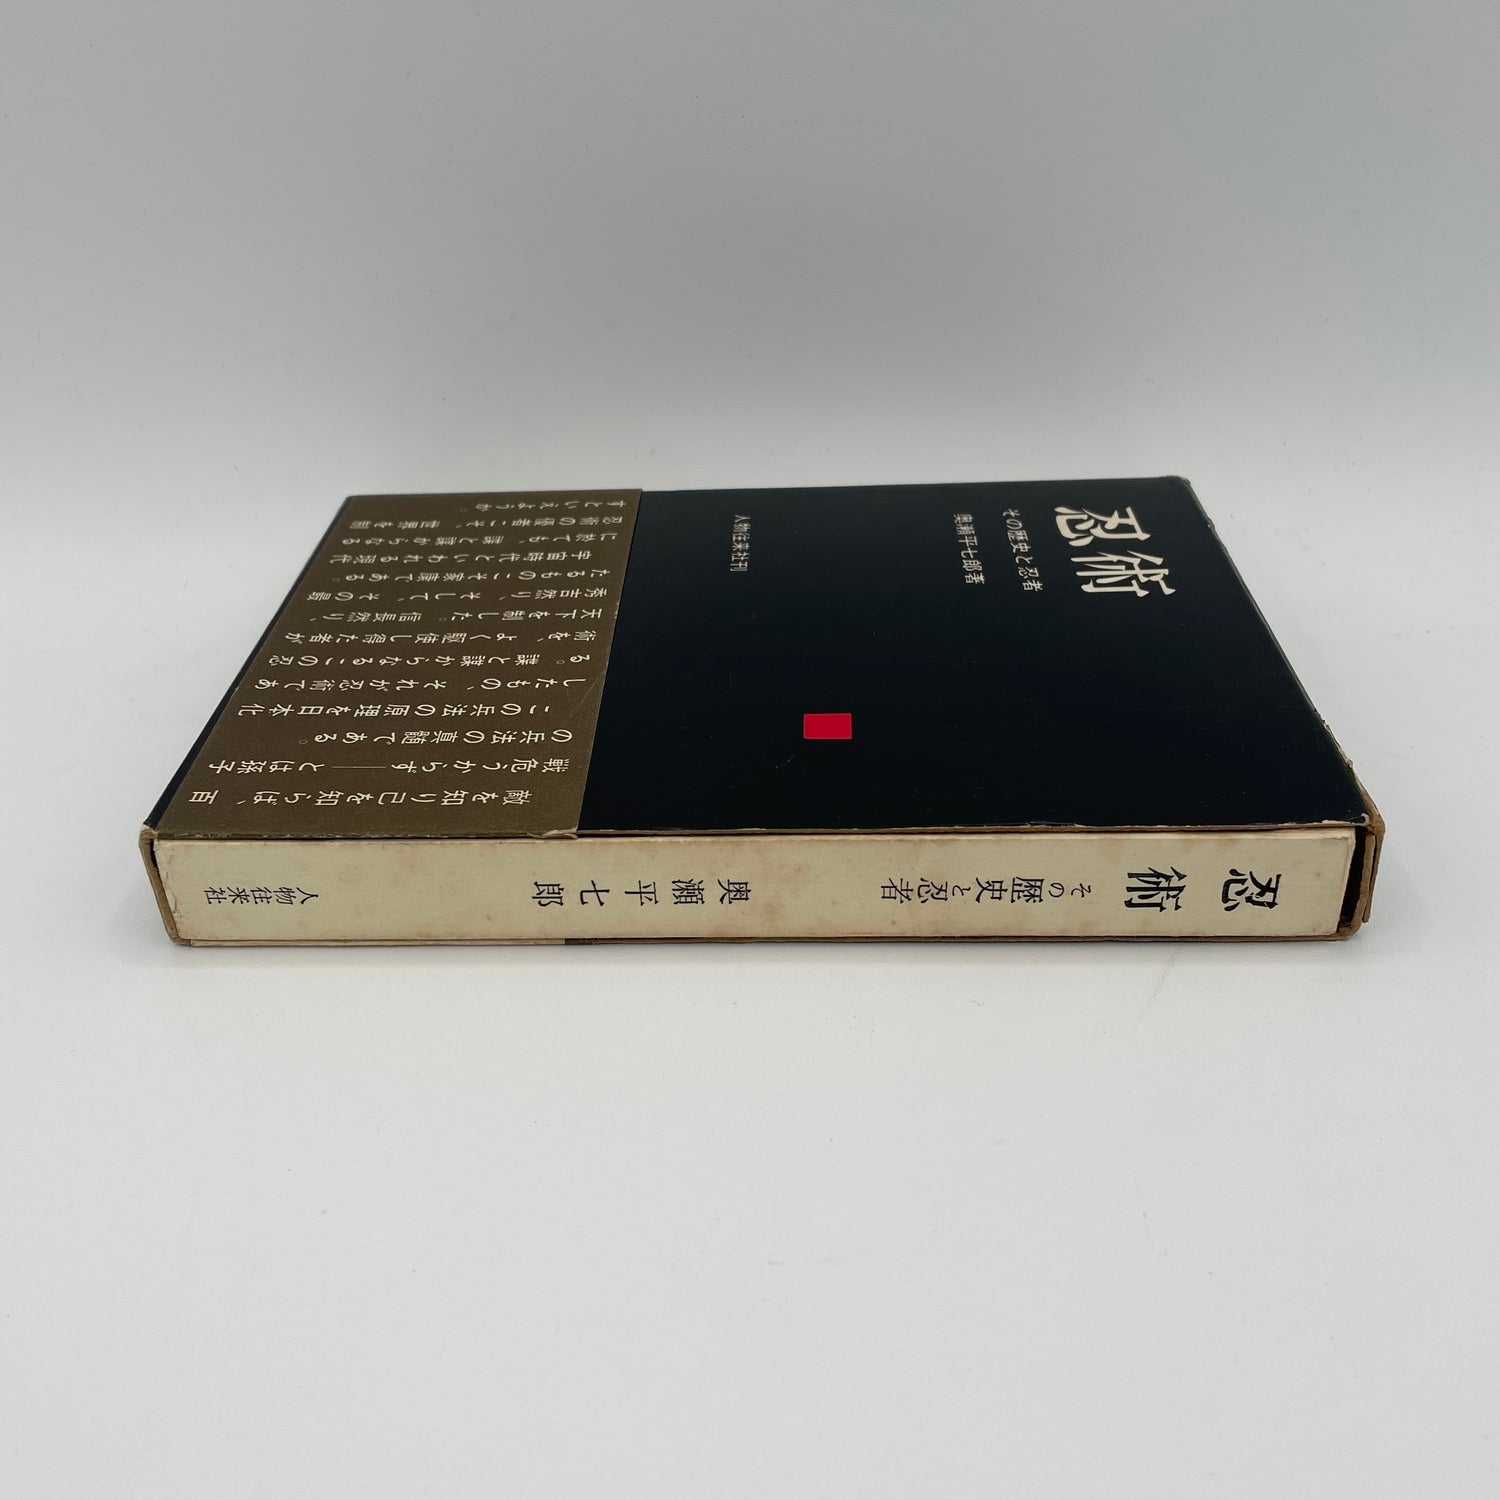 Ninjutsu: Its History & Ninja Book by Heishichiro Okuse (Hardcover)(Preowned)